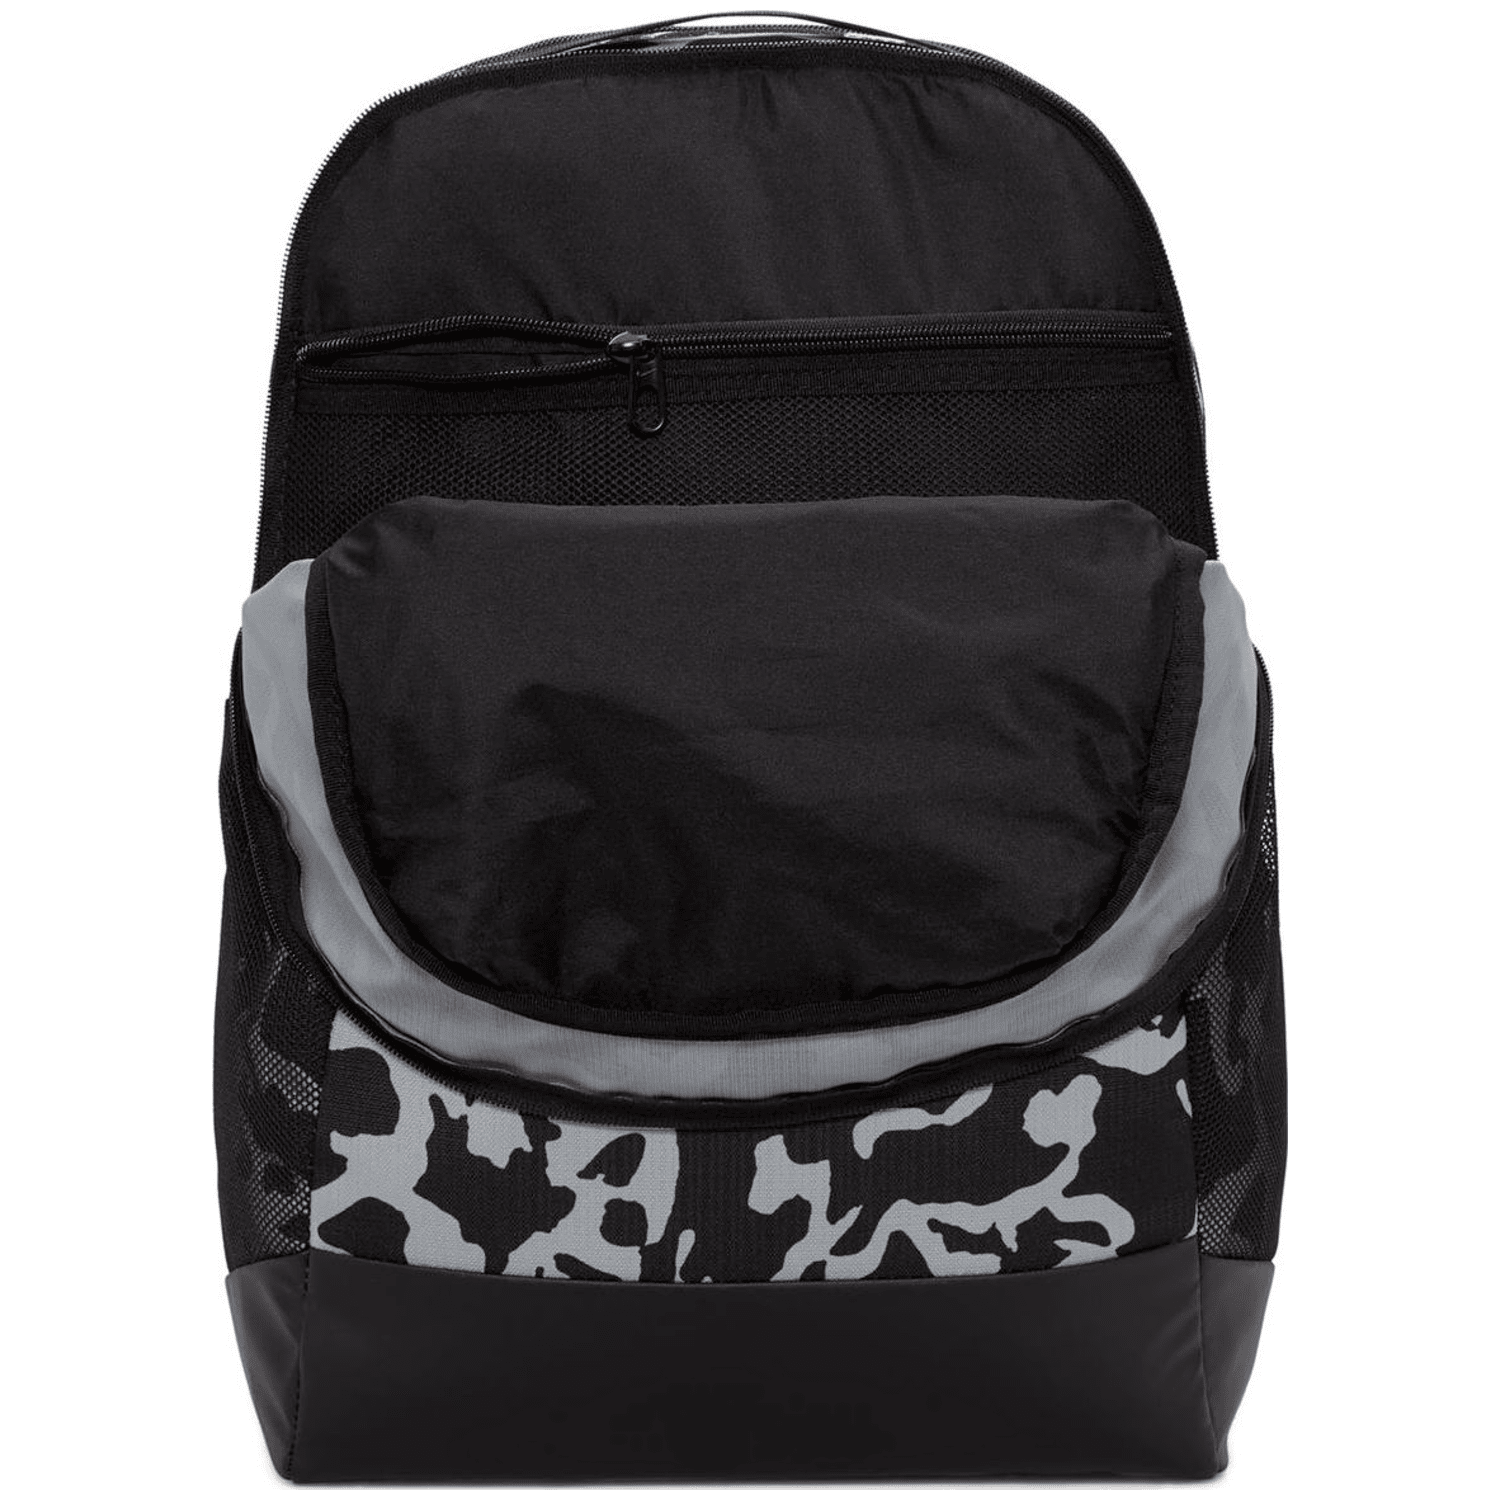 Nike Brasilia (Medium, 24L) Unisex Daybag